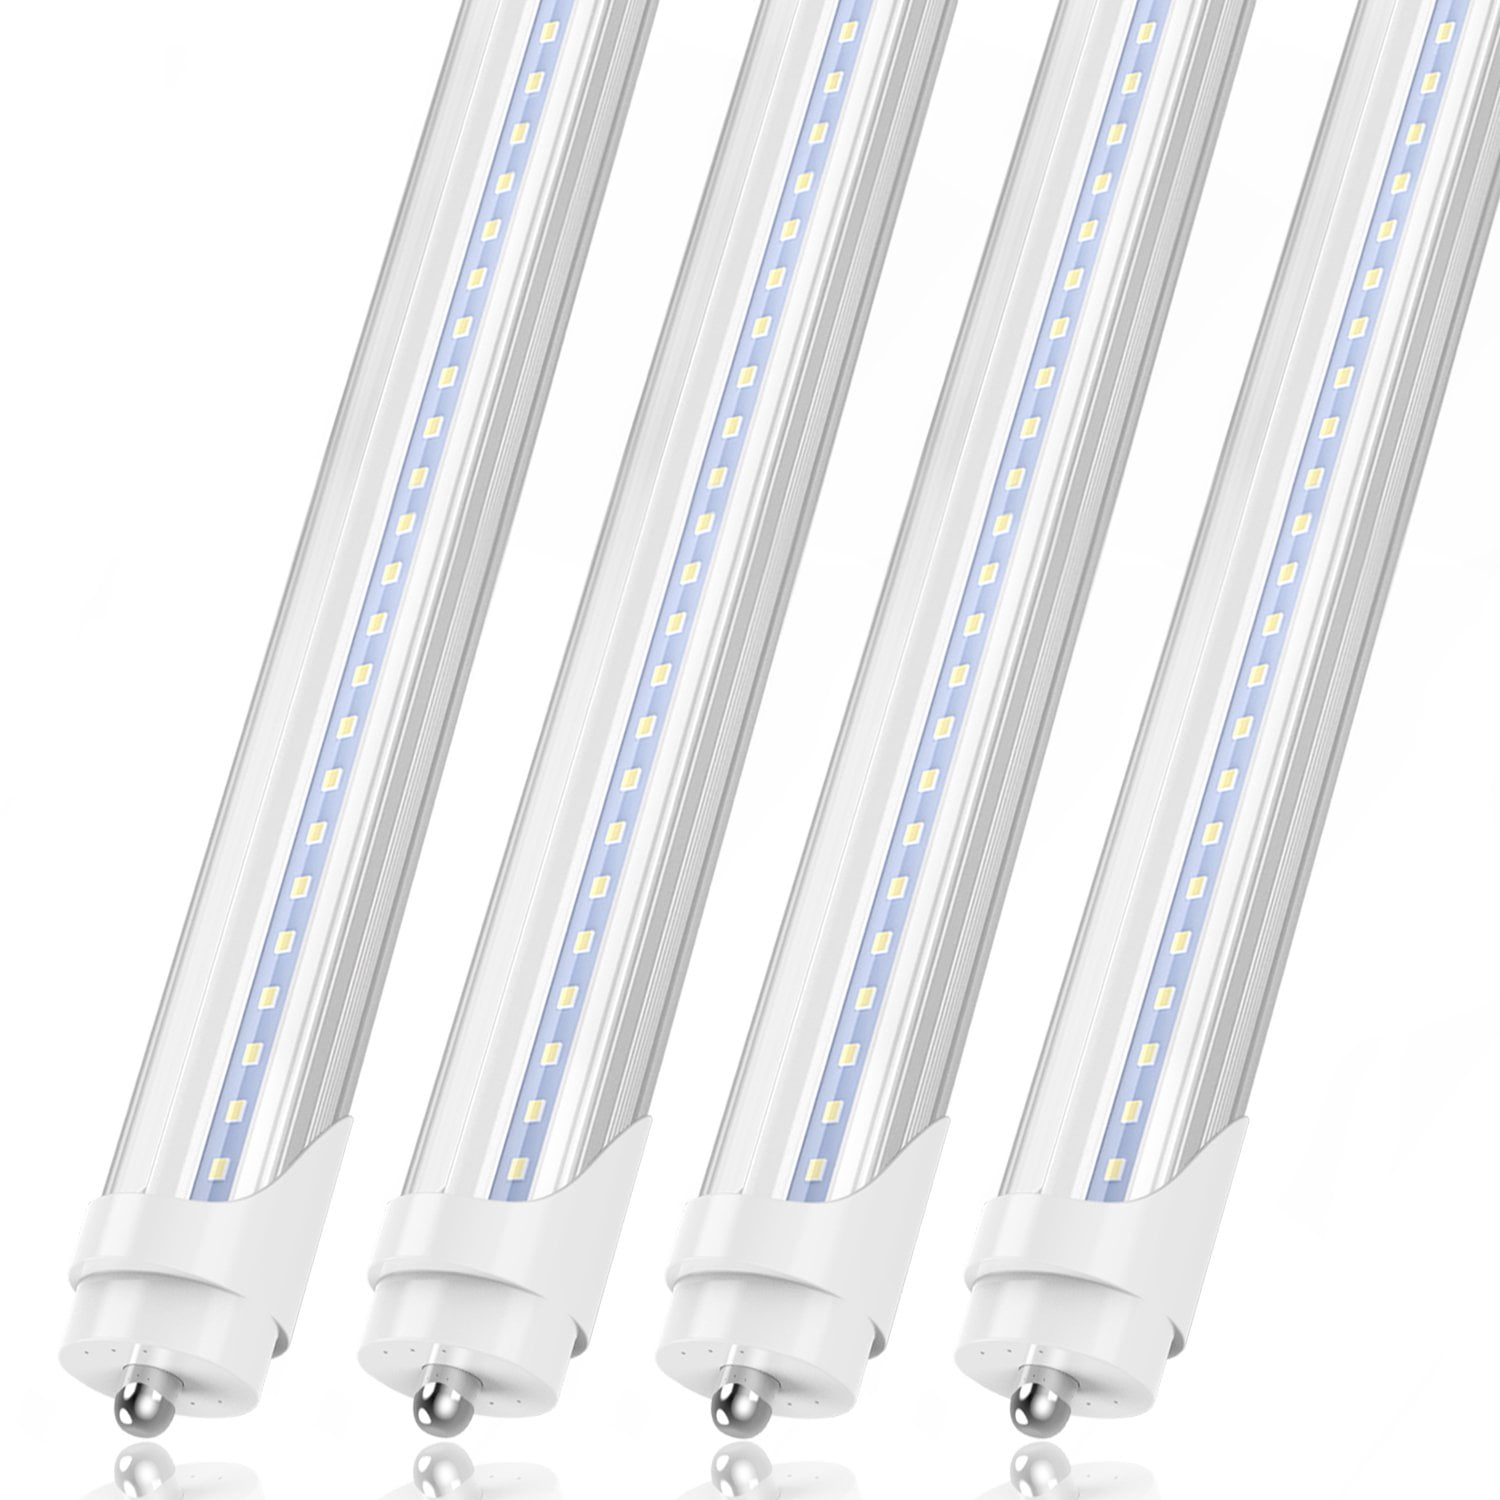 Details about   25Pack Led Tube Light Bulbs T8 8FT 45W 8Foot FA8 Single Pin Led Shop Light 5000K 